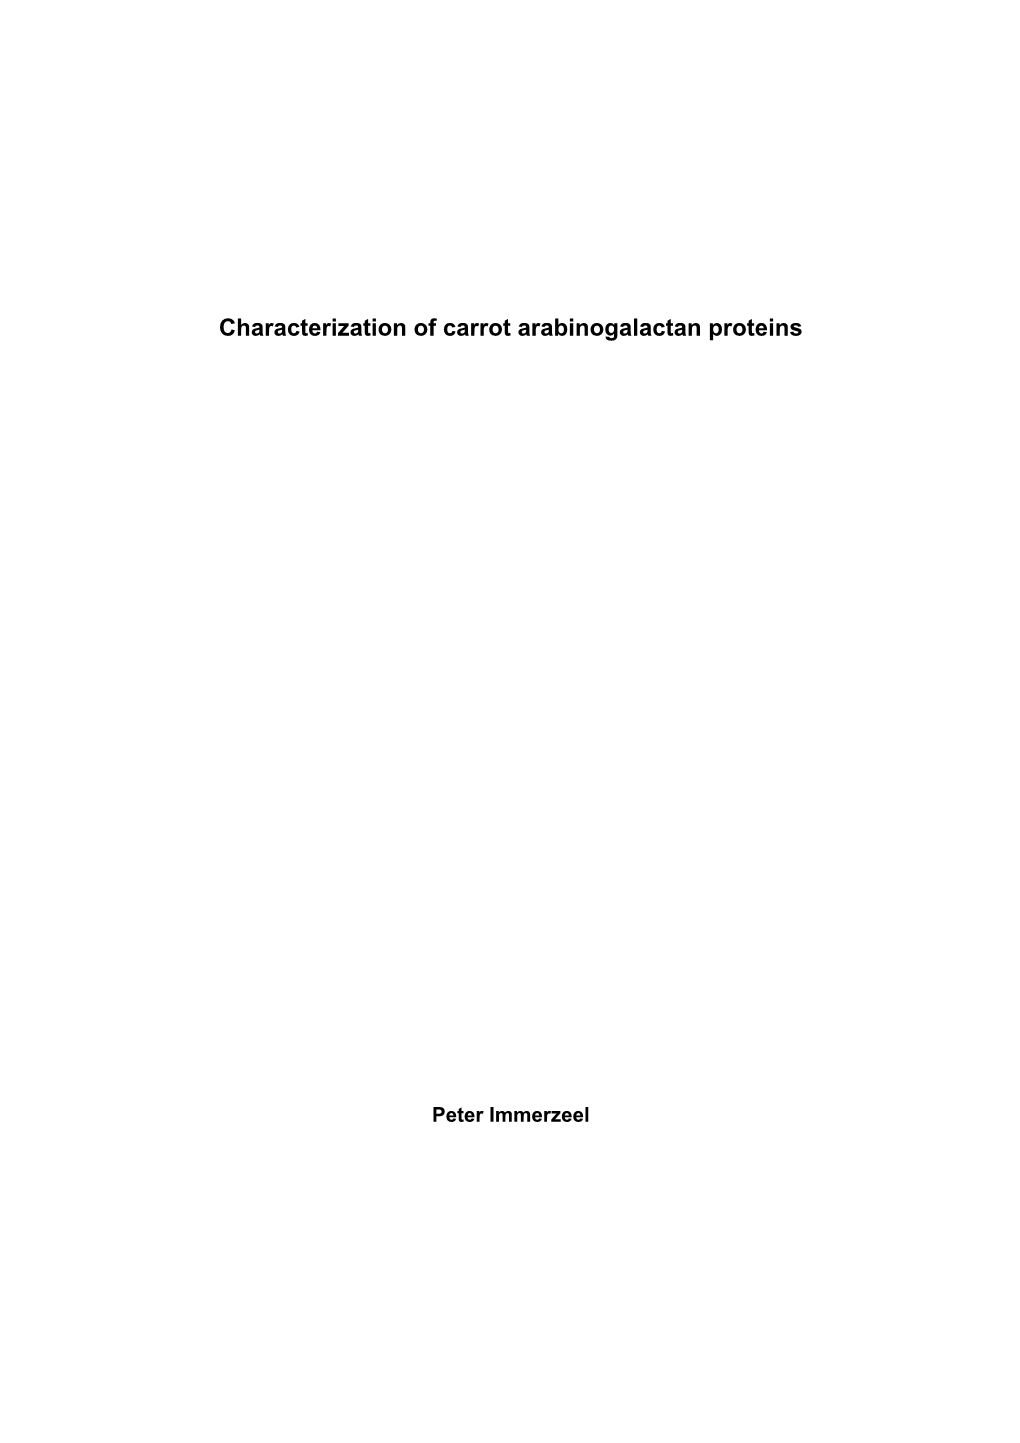 Characterization of Carrot Arabinogalactan Proteins